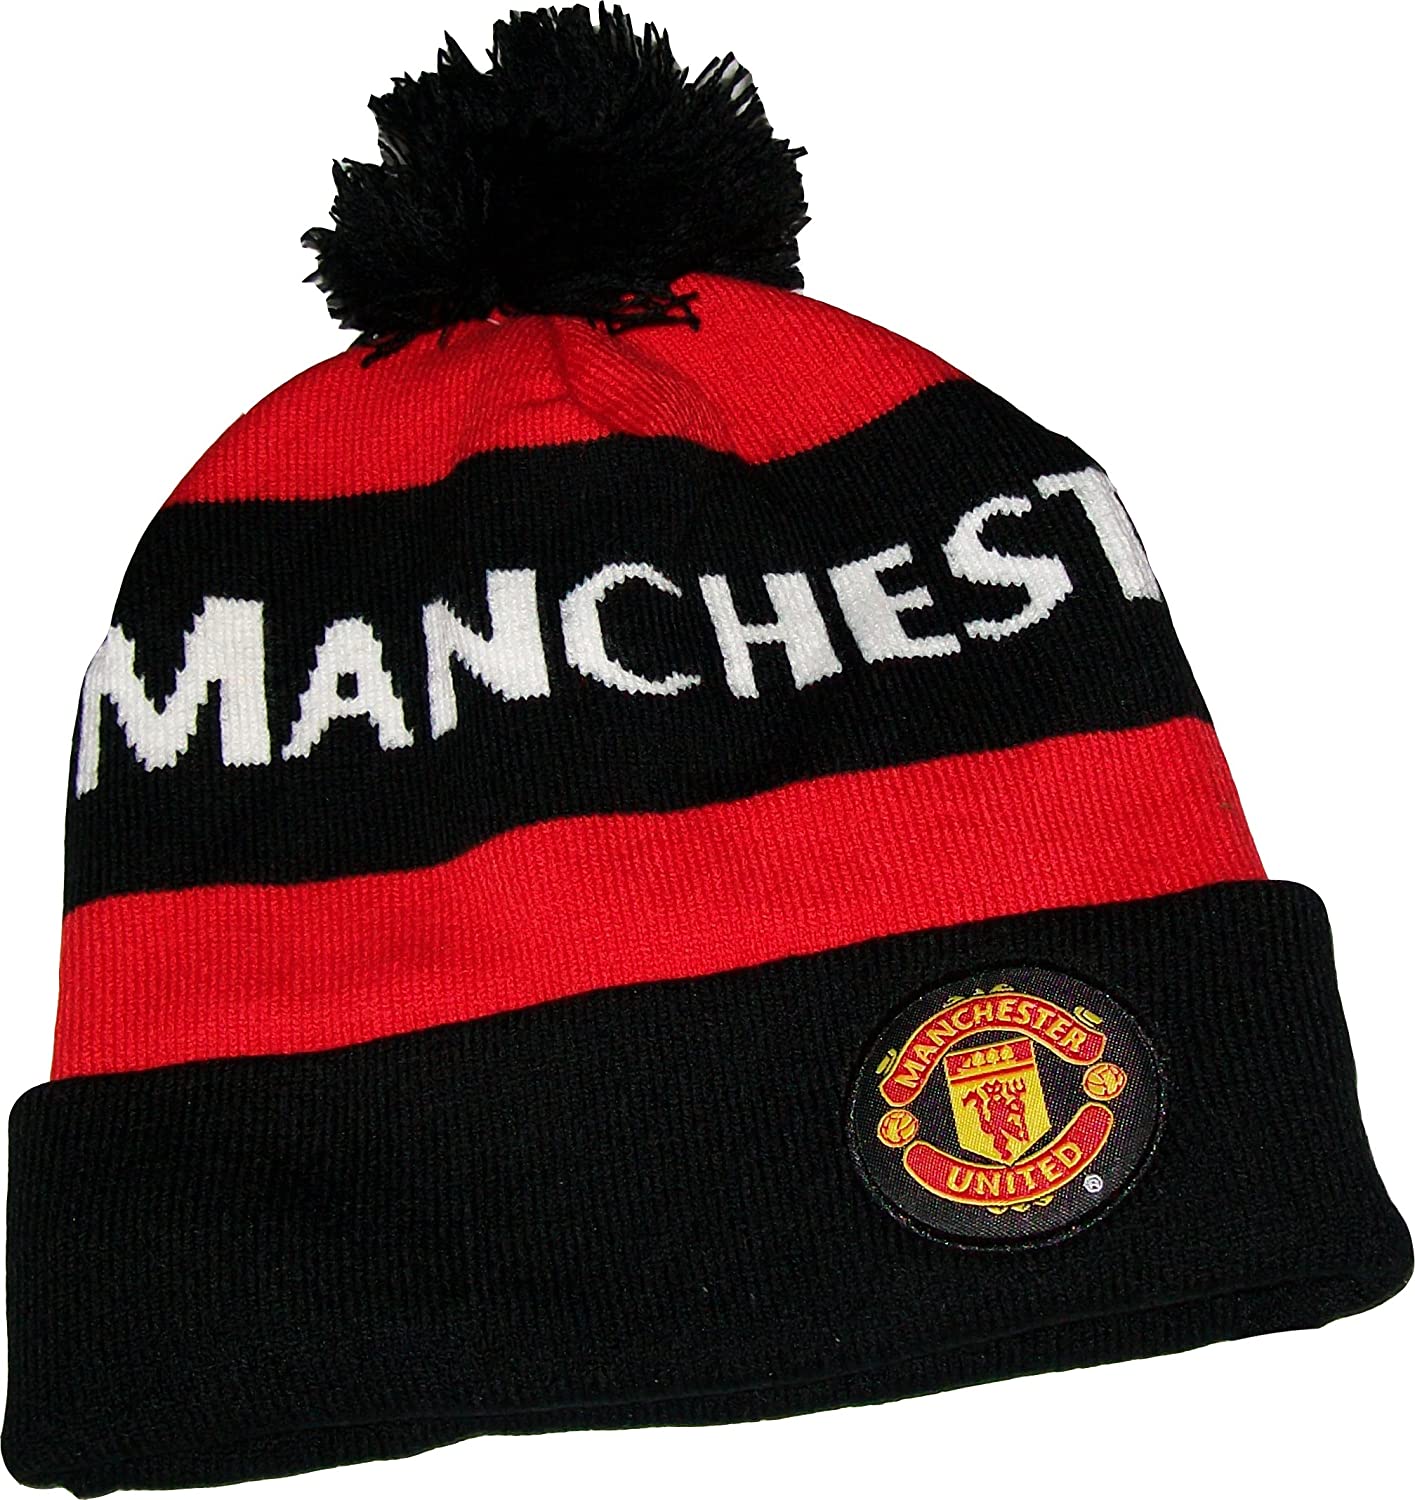 Manchester United zimná čiapka - SKLADOM